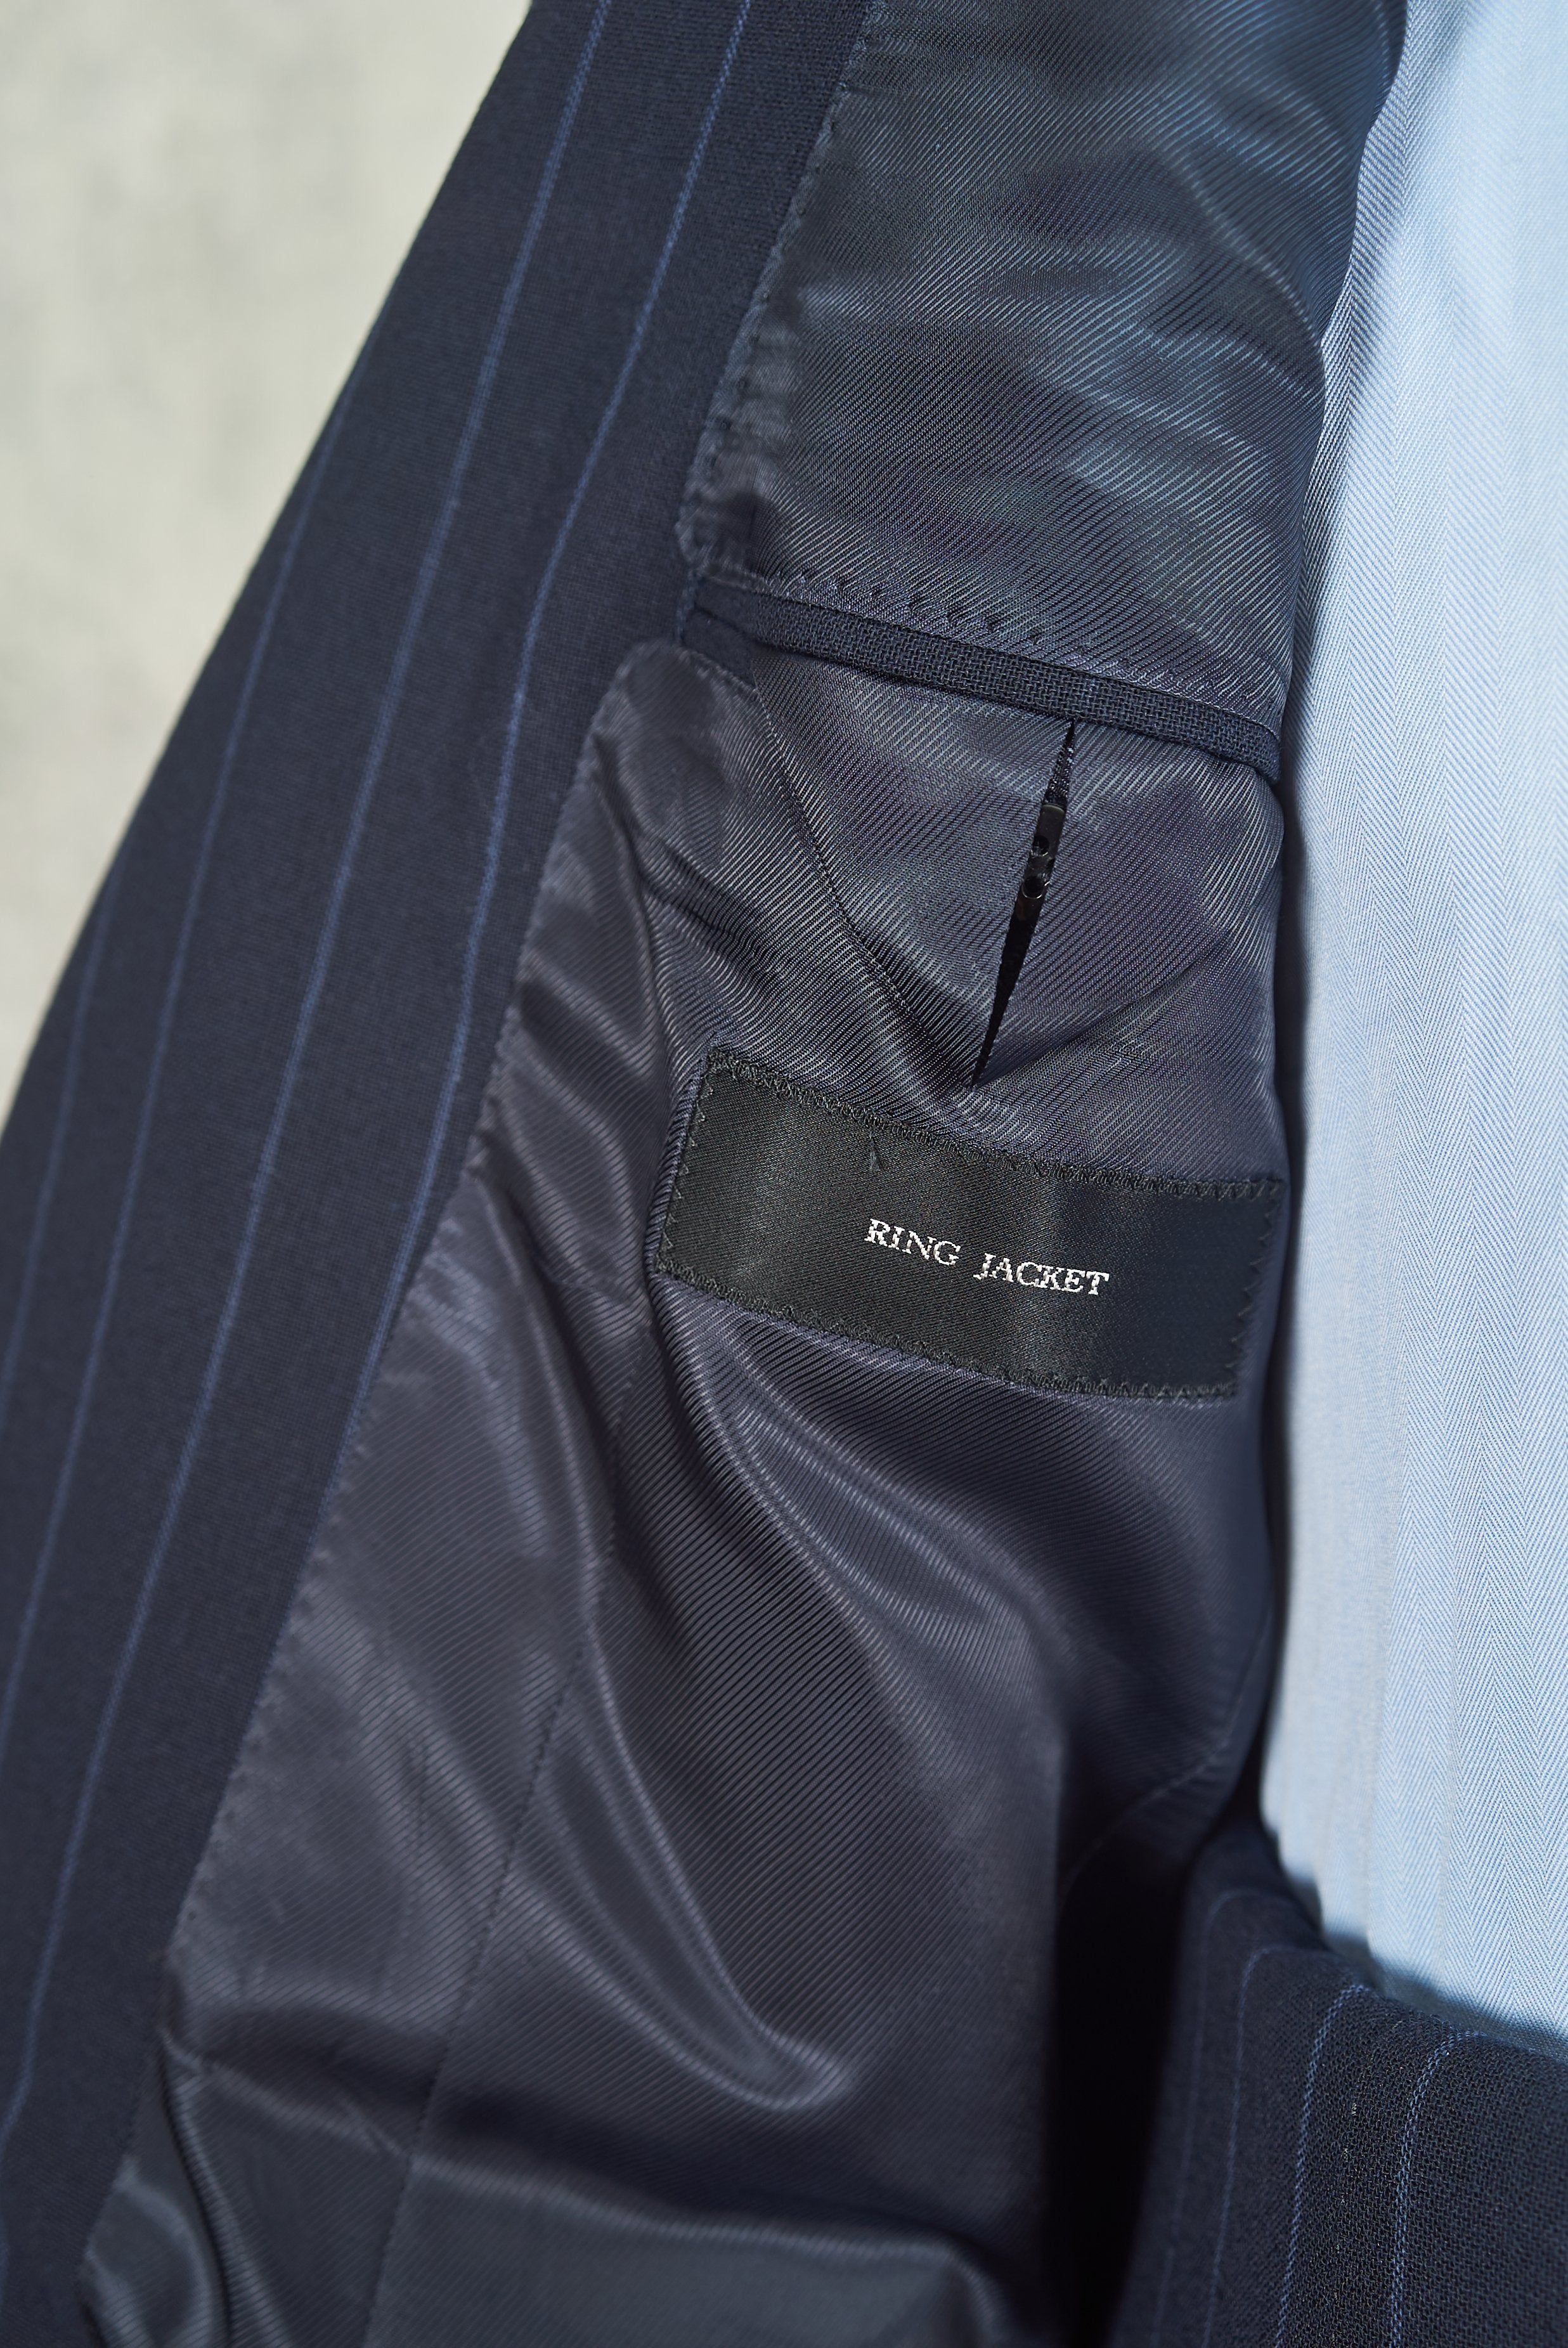 Ring Jacket AMJ01 Navy Wool/Silk "Ice Twist" Chalkstripe Suit